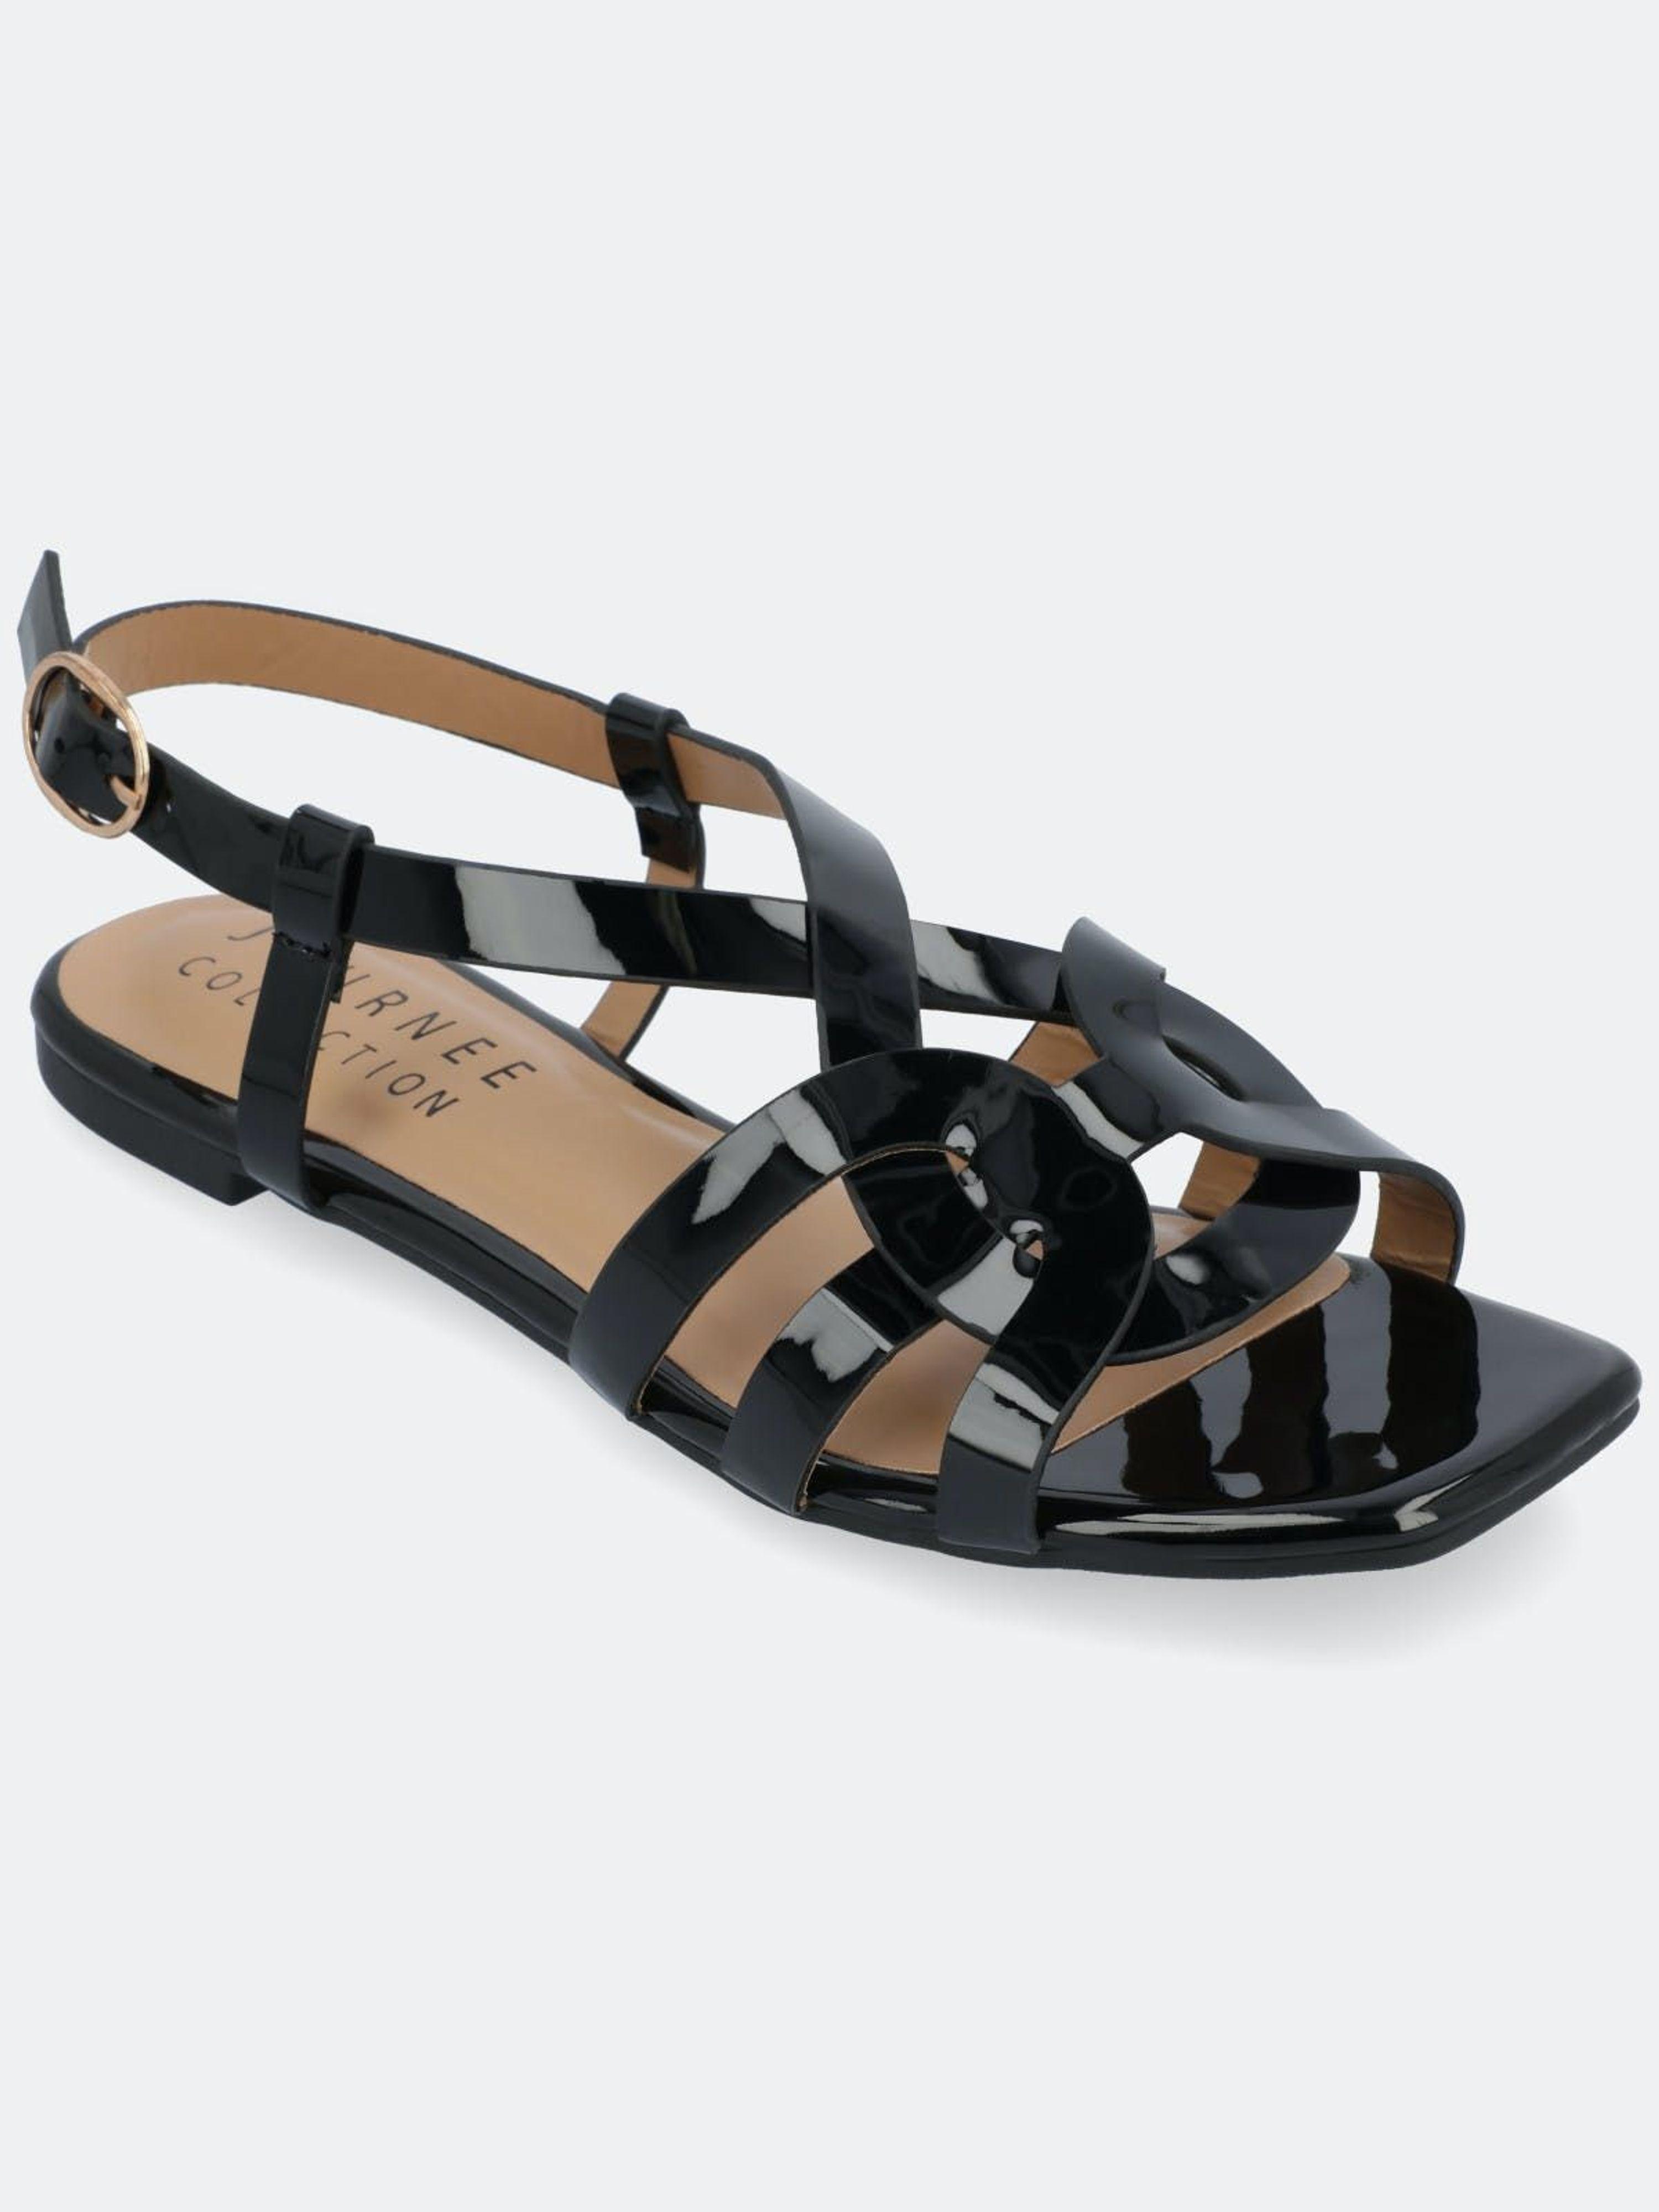 Journee Collection Tru Comfort Foam Alorra Sandals in Black | Lyst